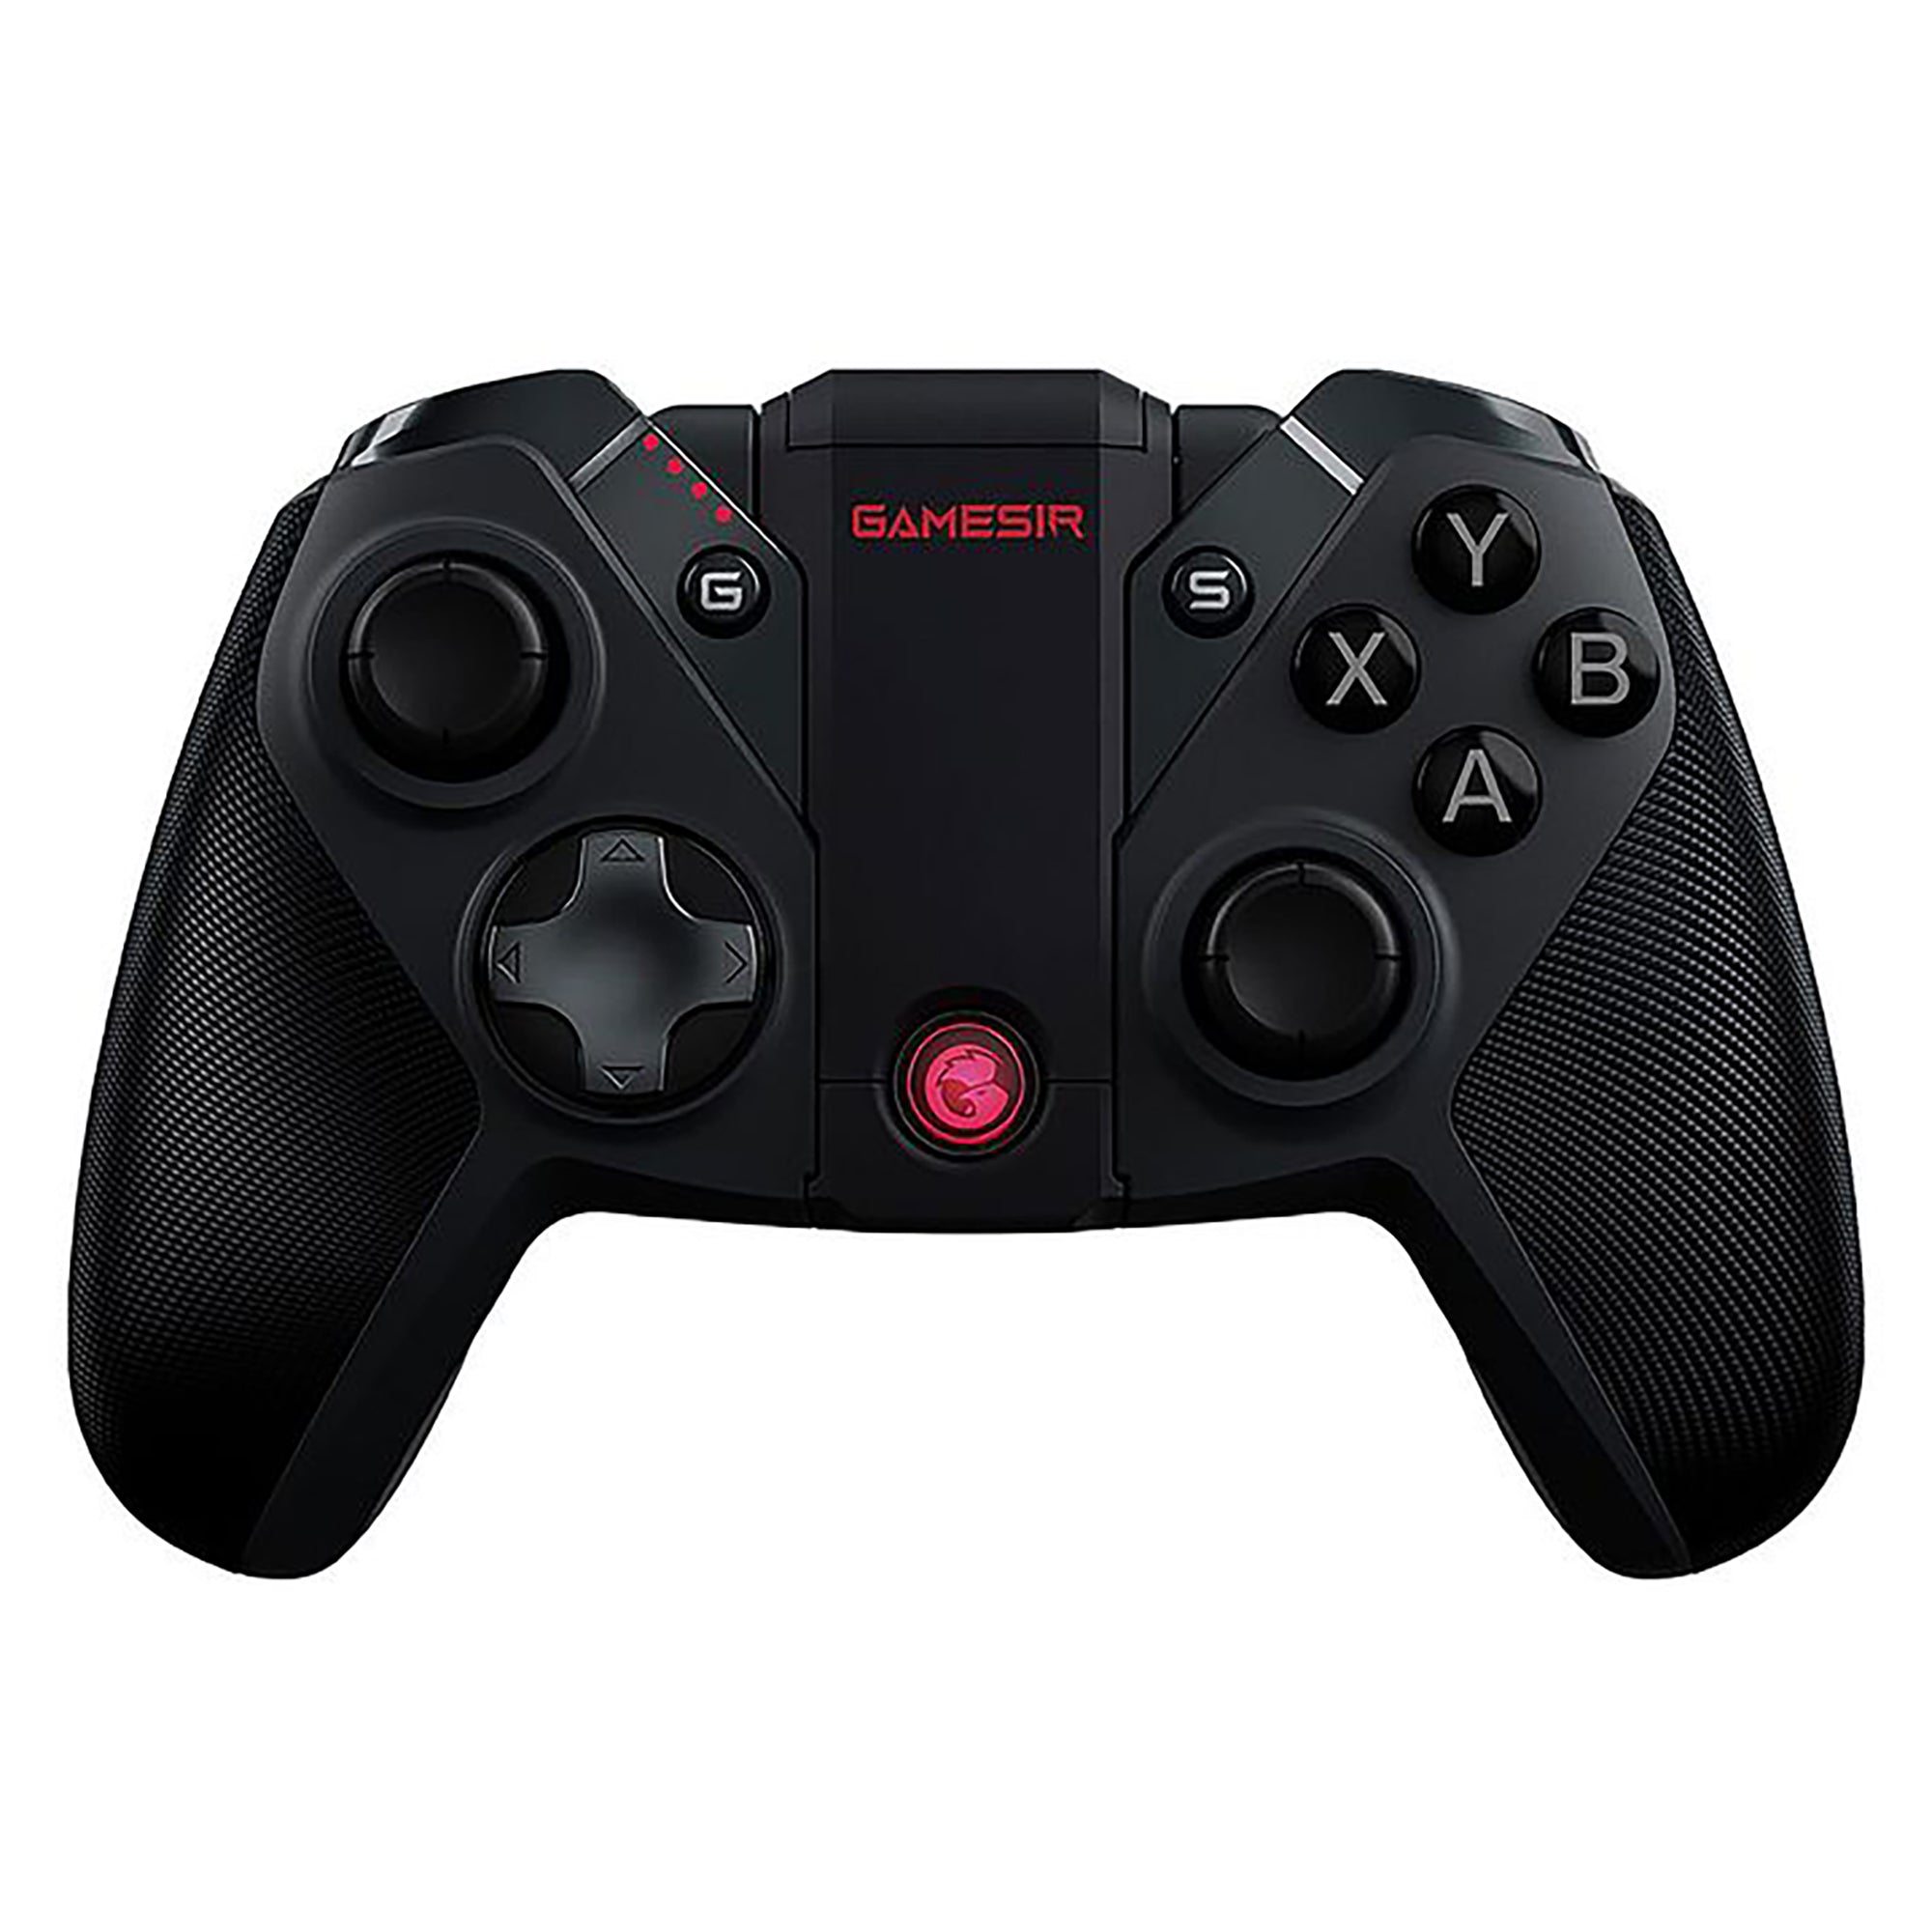 Gamesir G4 Pro Wireless Bluetooth Game Controller, Black